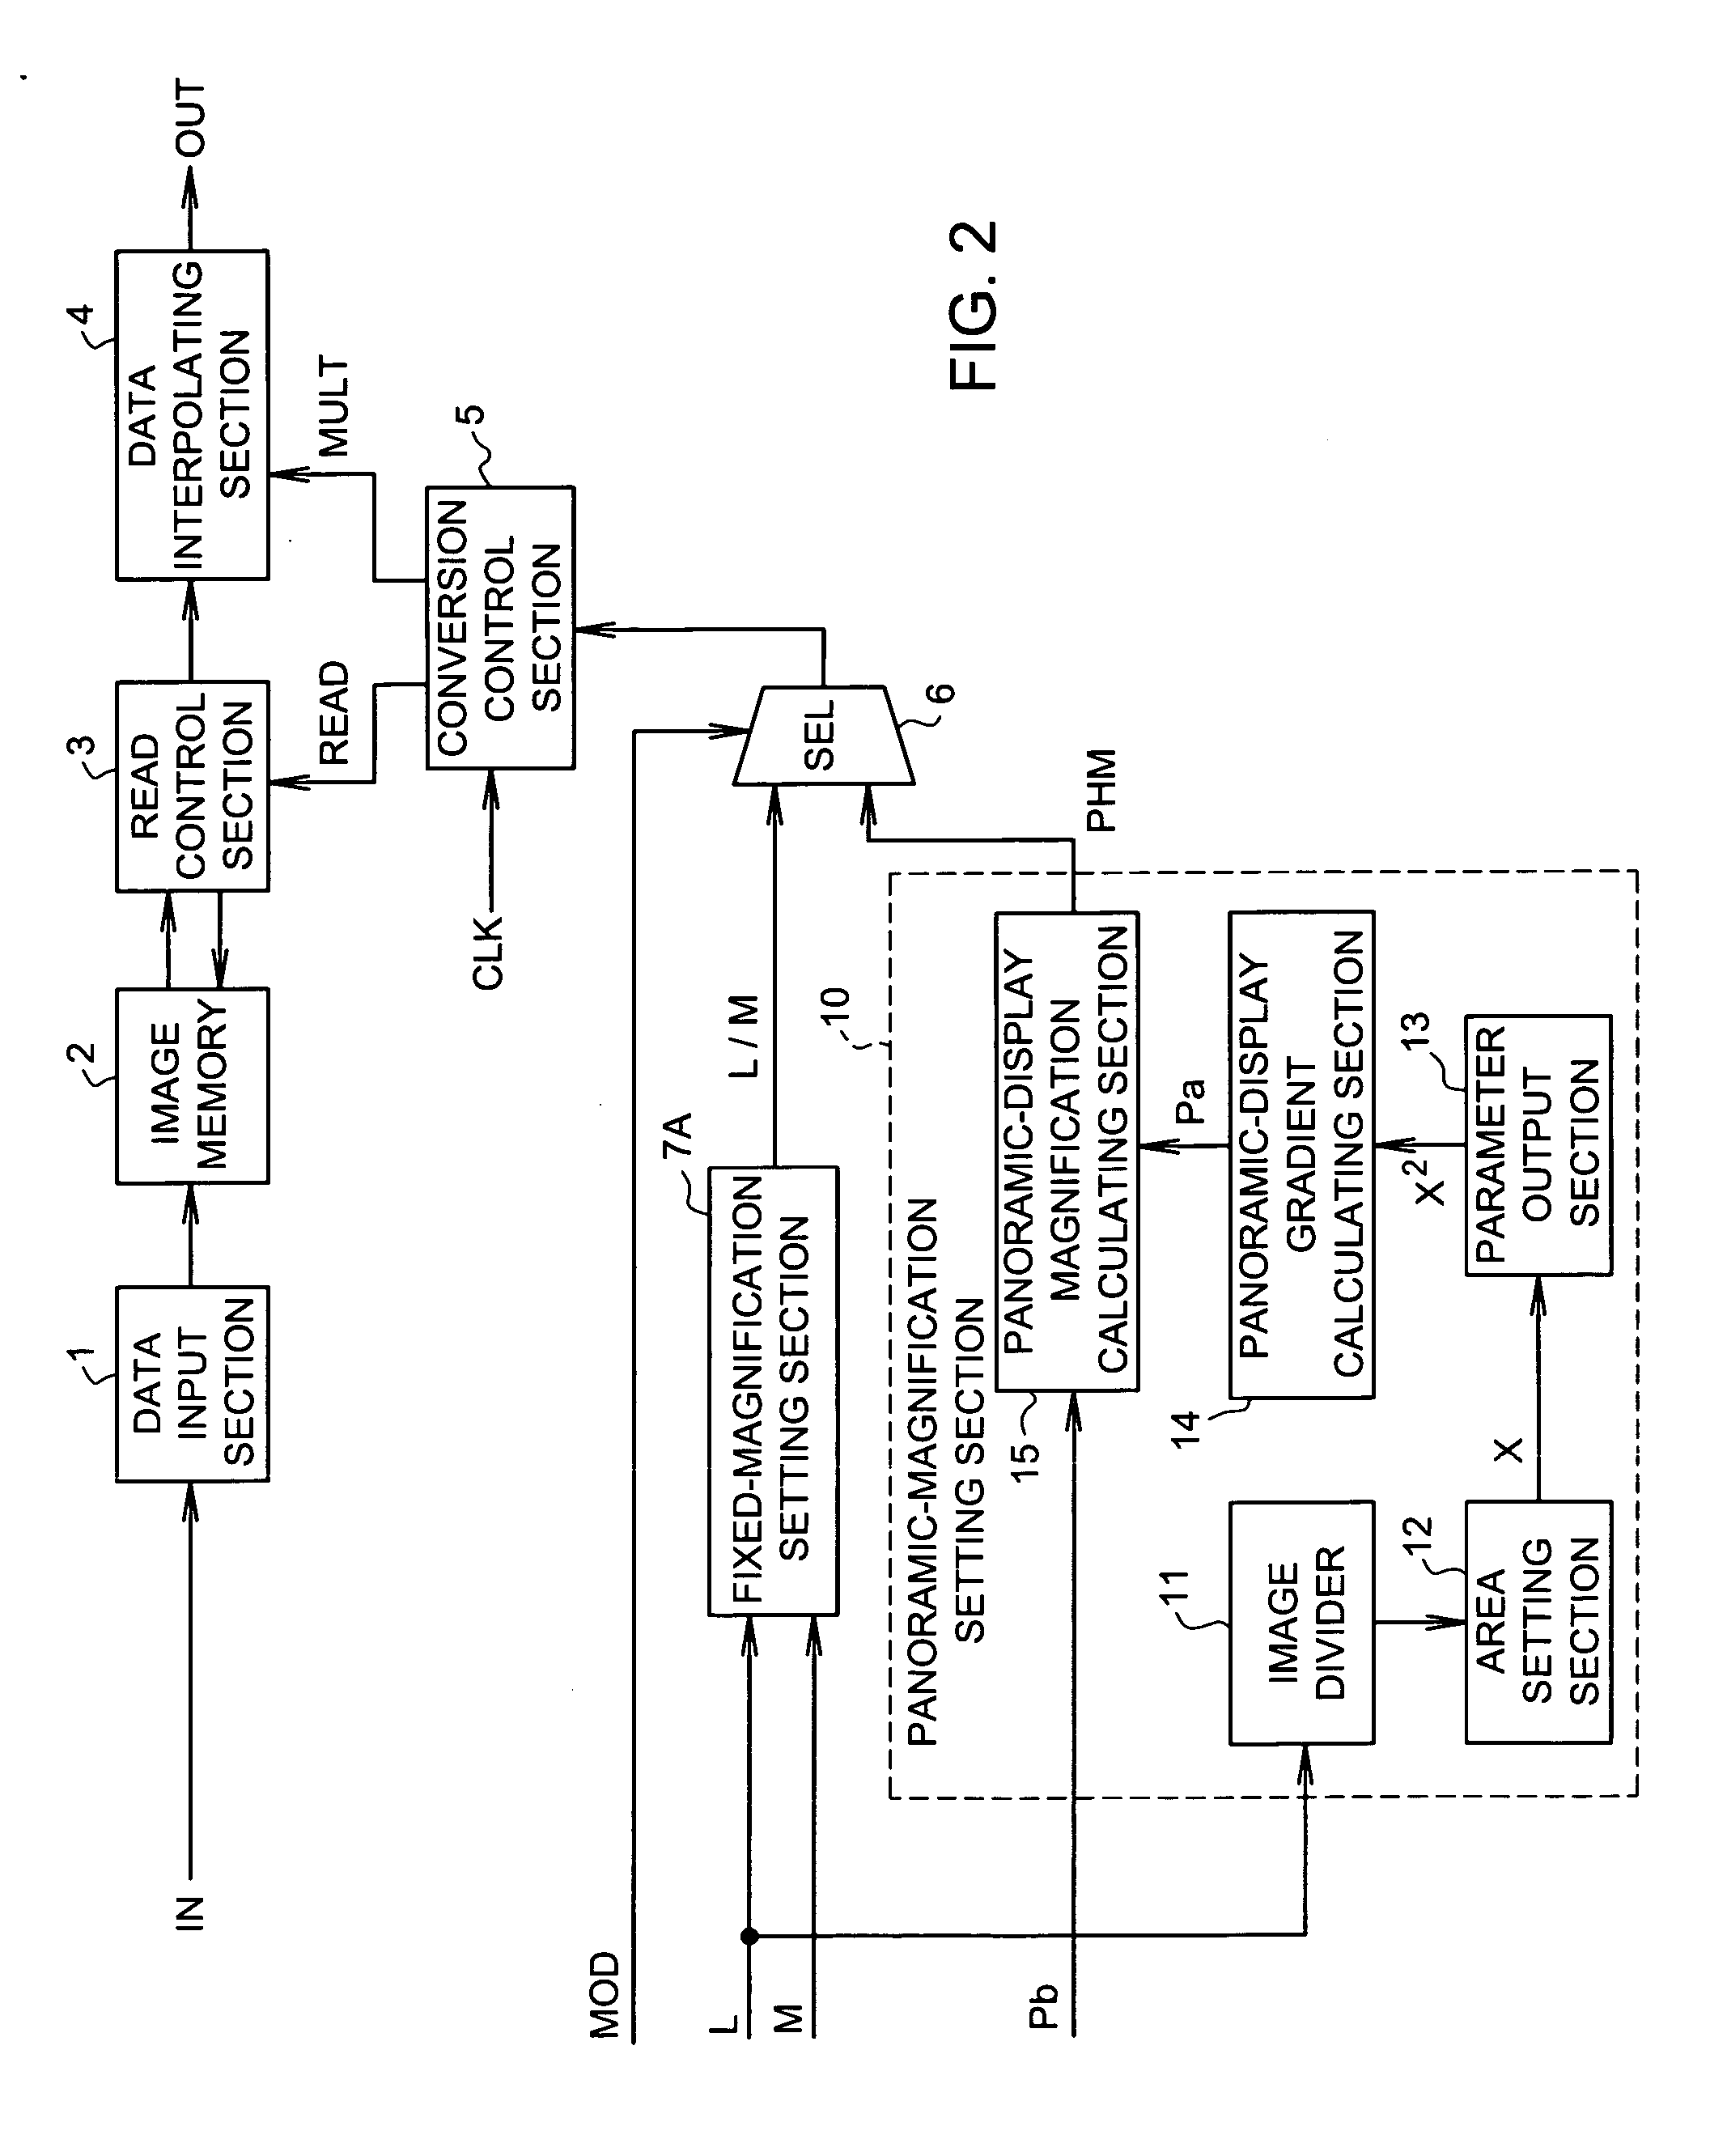 Image converter circuit